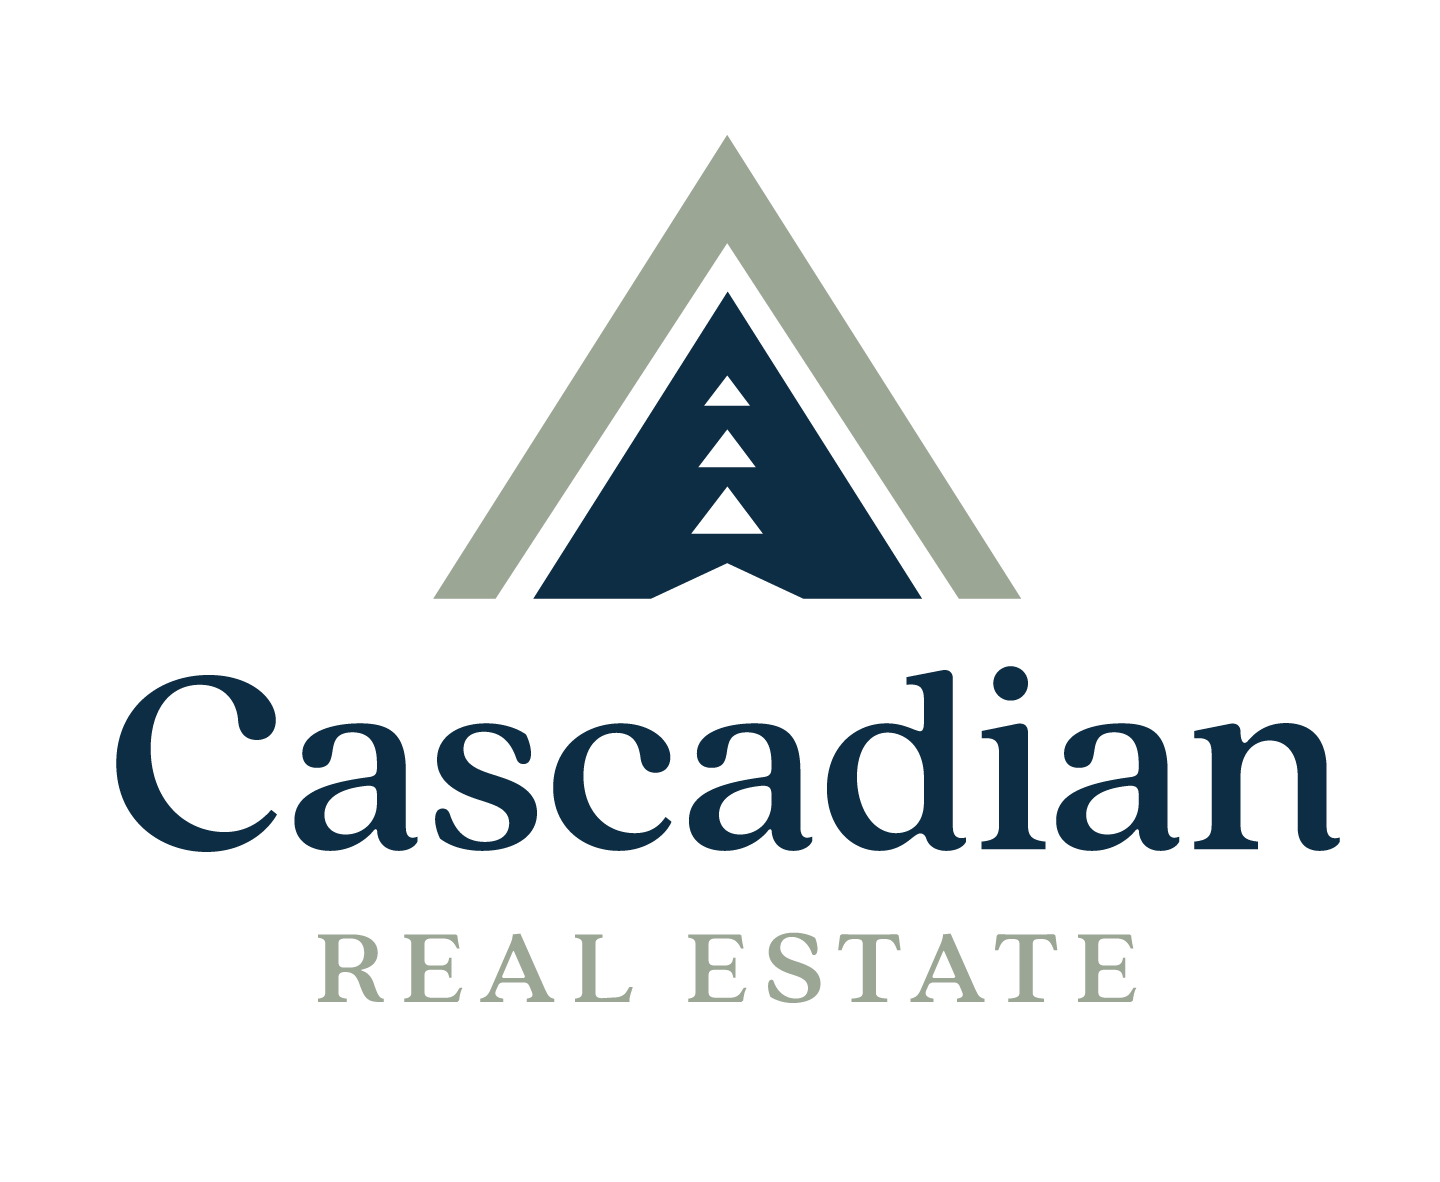 Cascadian Real Estate